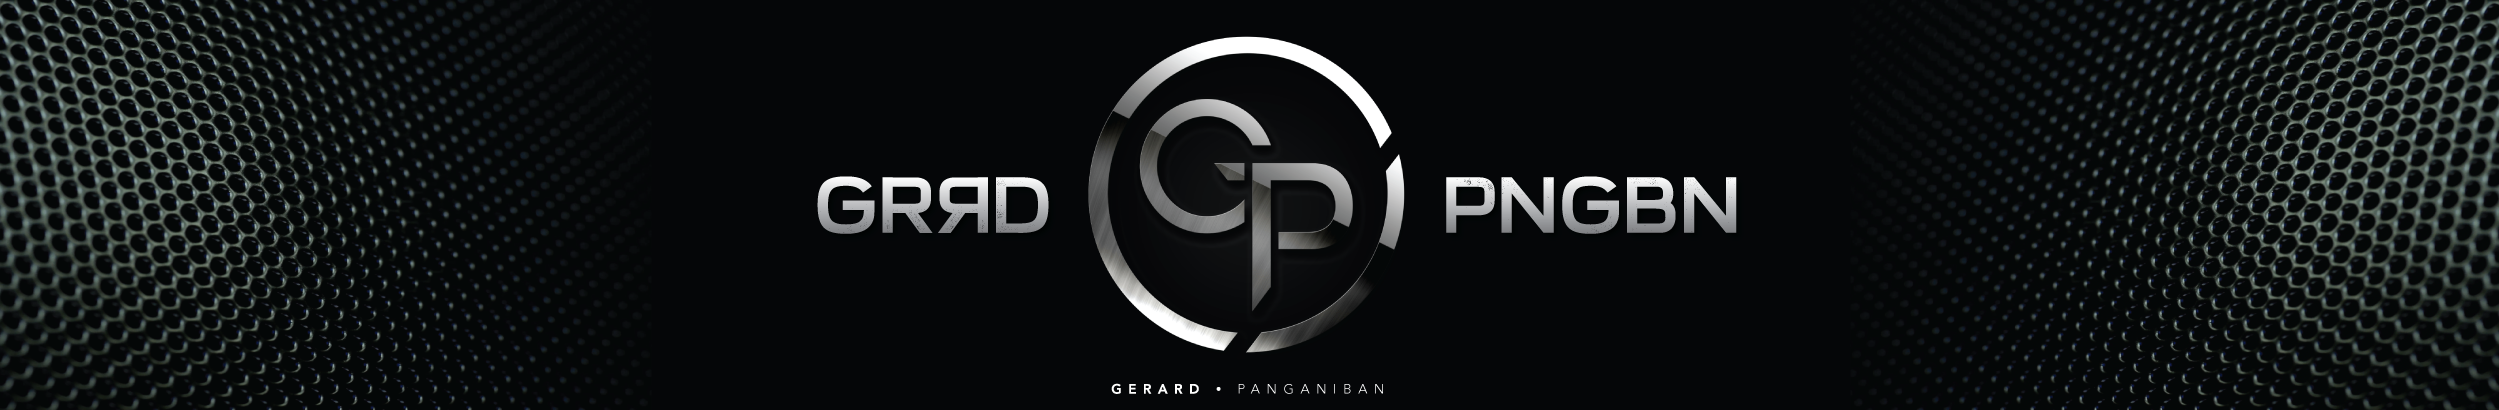 Gerard Panganiban's profile banner